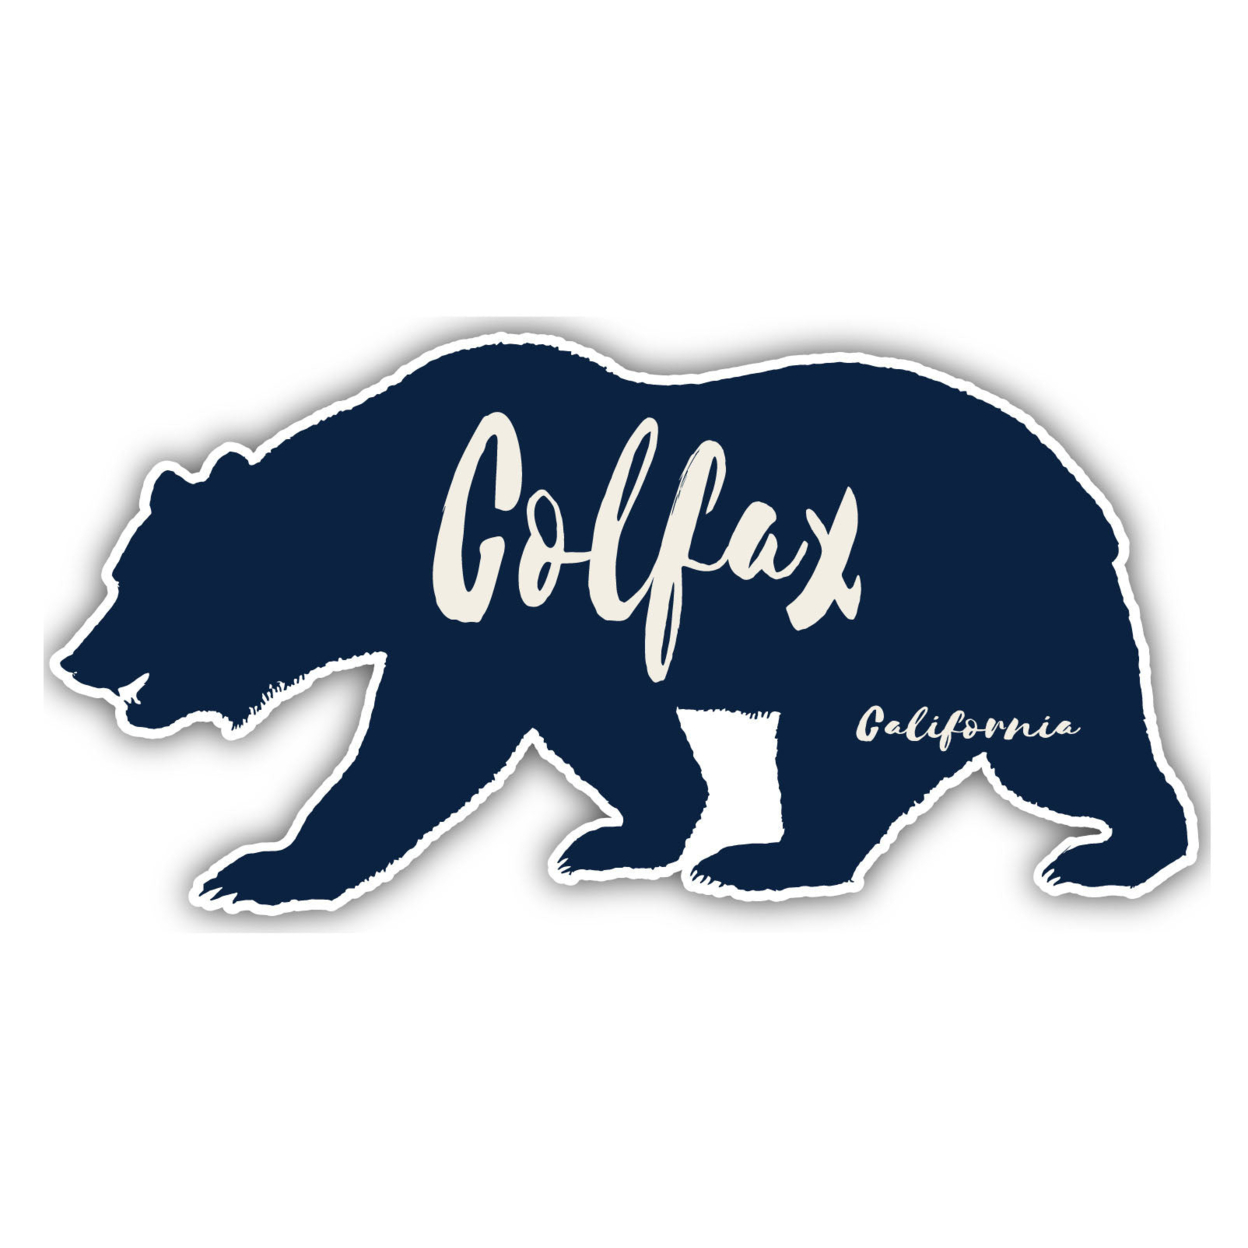 Colfax California Souvenir Decorative Stickers (Choose Theme And Size) - Single Unit, 2-Inch, Bear